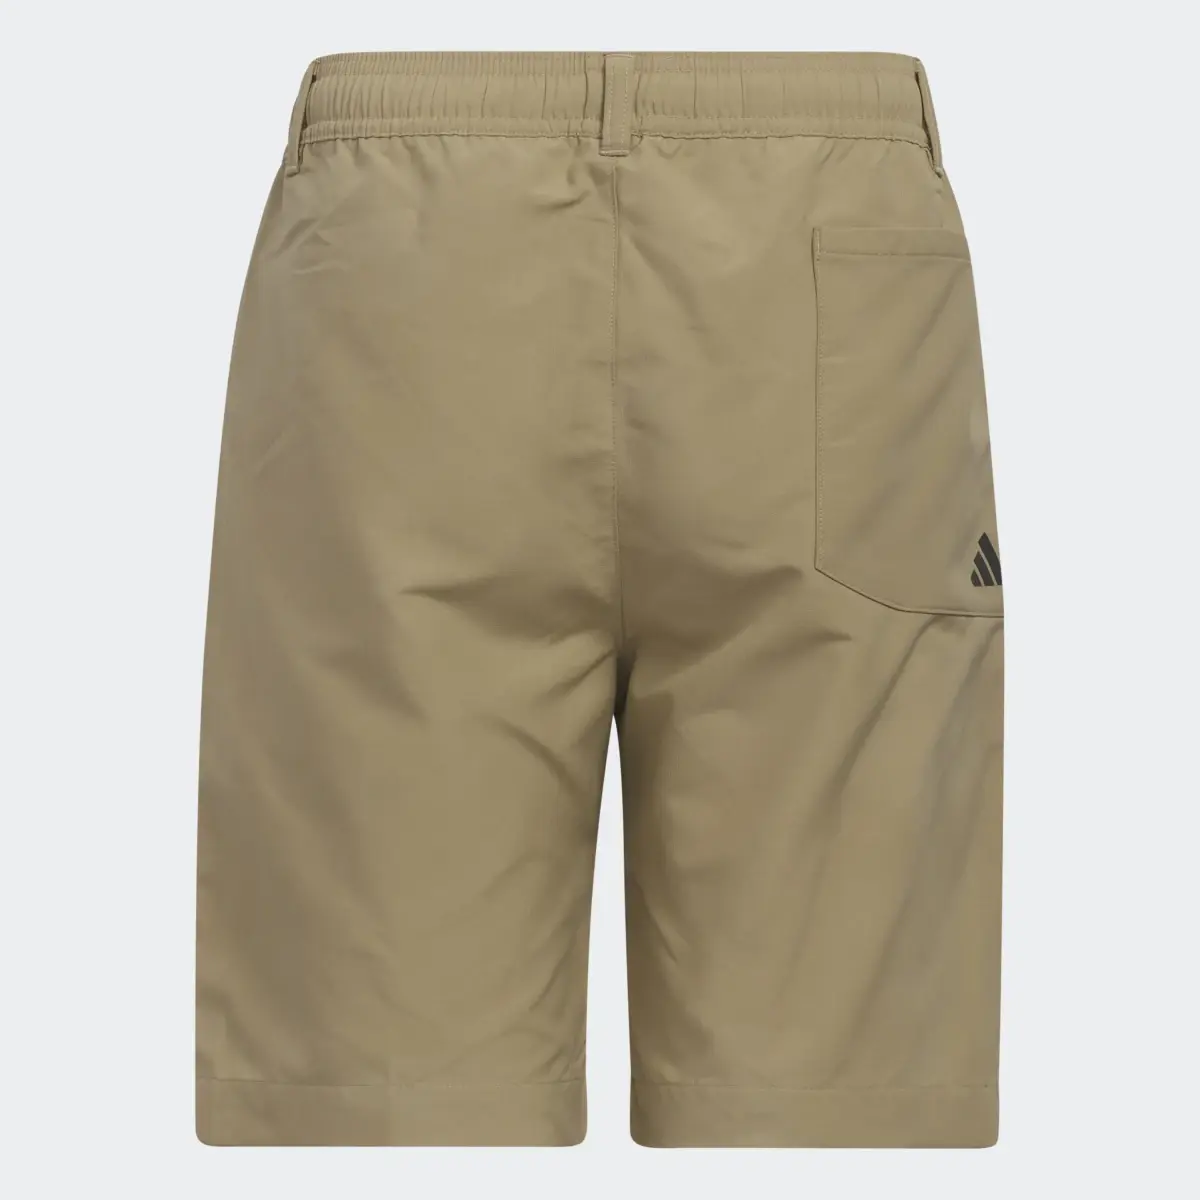 Adidas Versatile Pull-on Shorts. 2